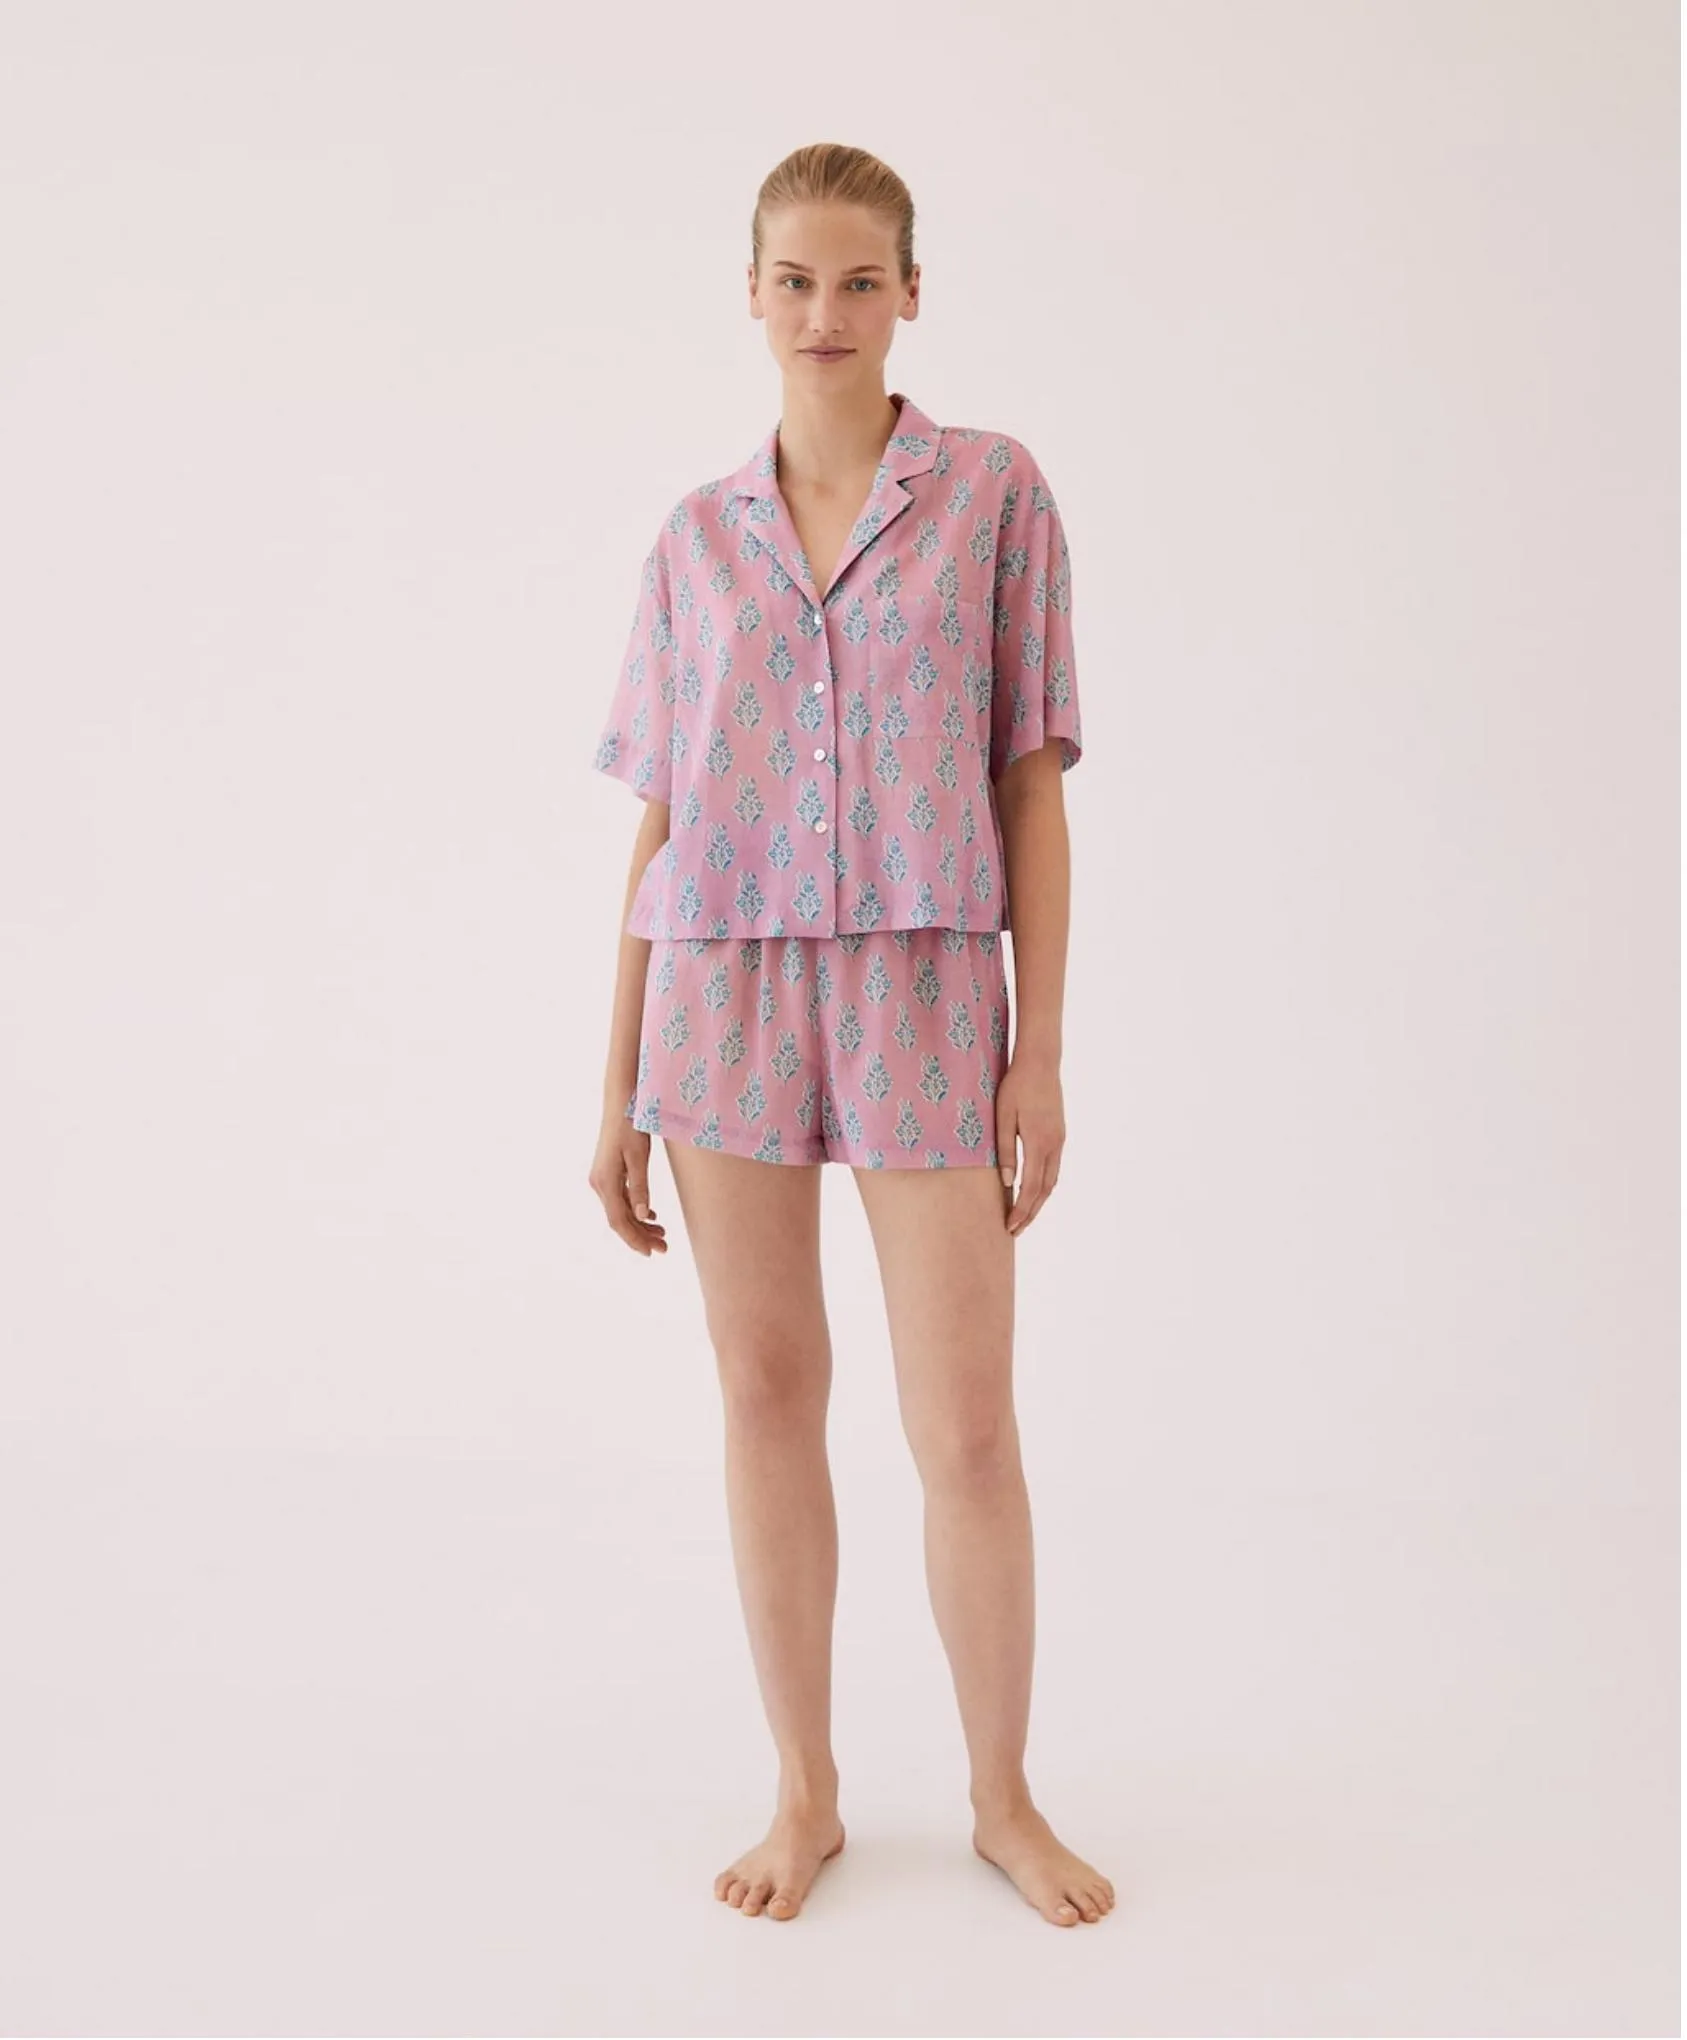 Catalogue Pyjamas et Homewear, page 00021